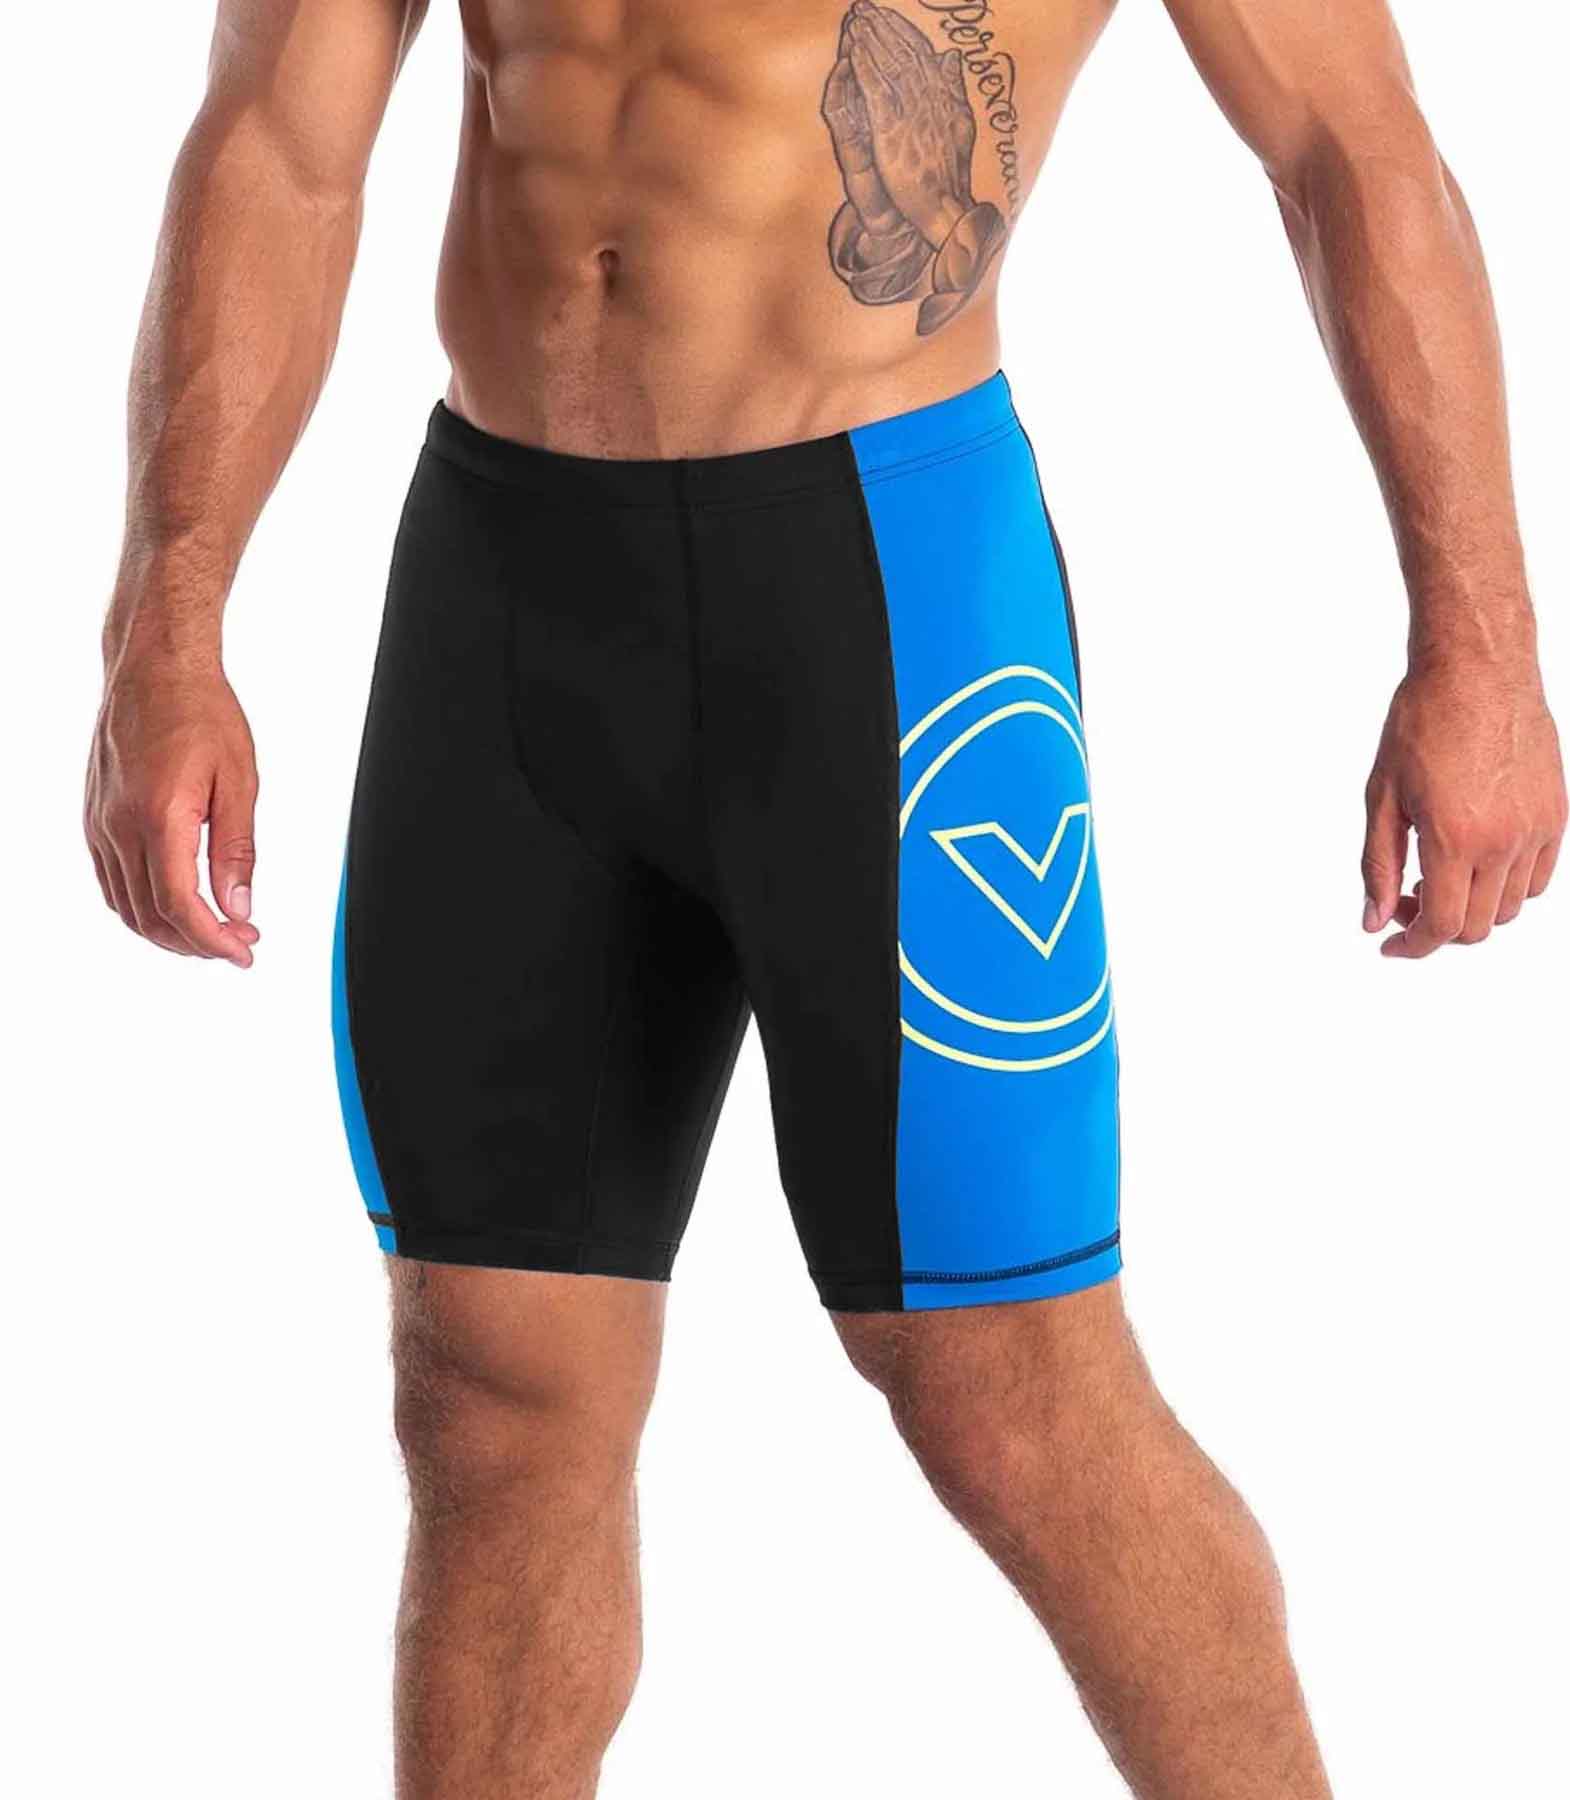 AU11 Tech-Shorts